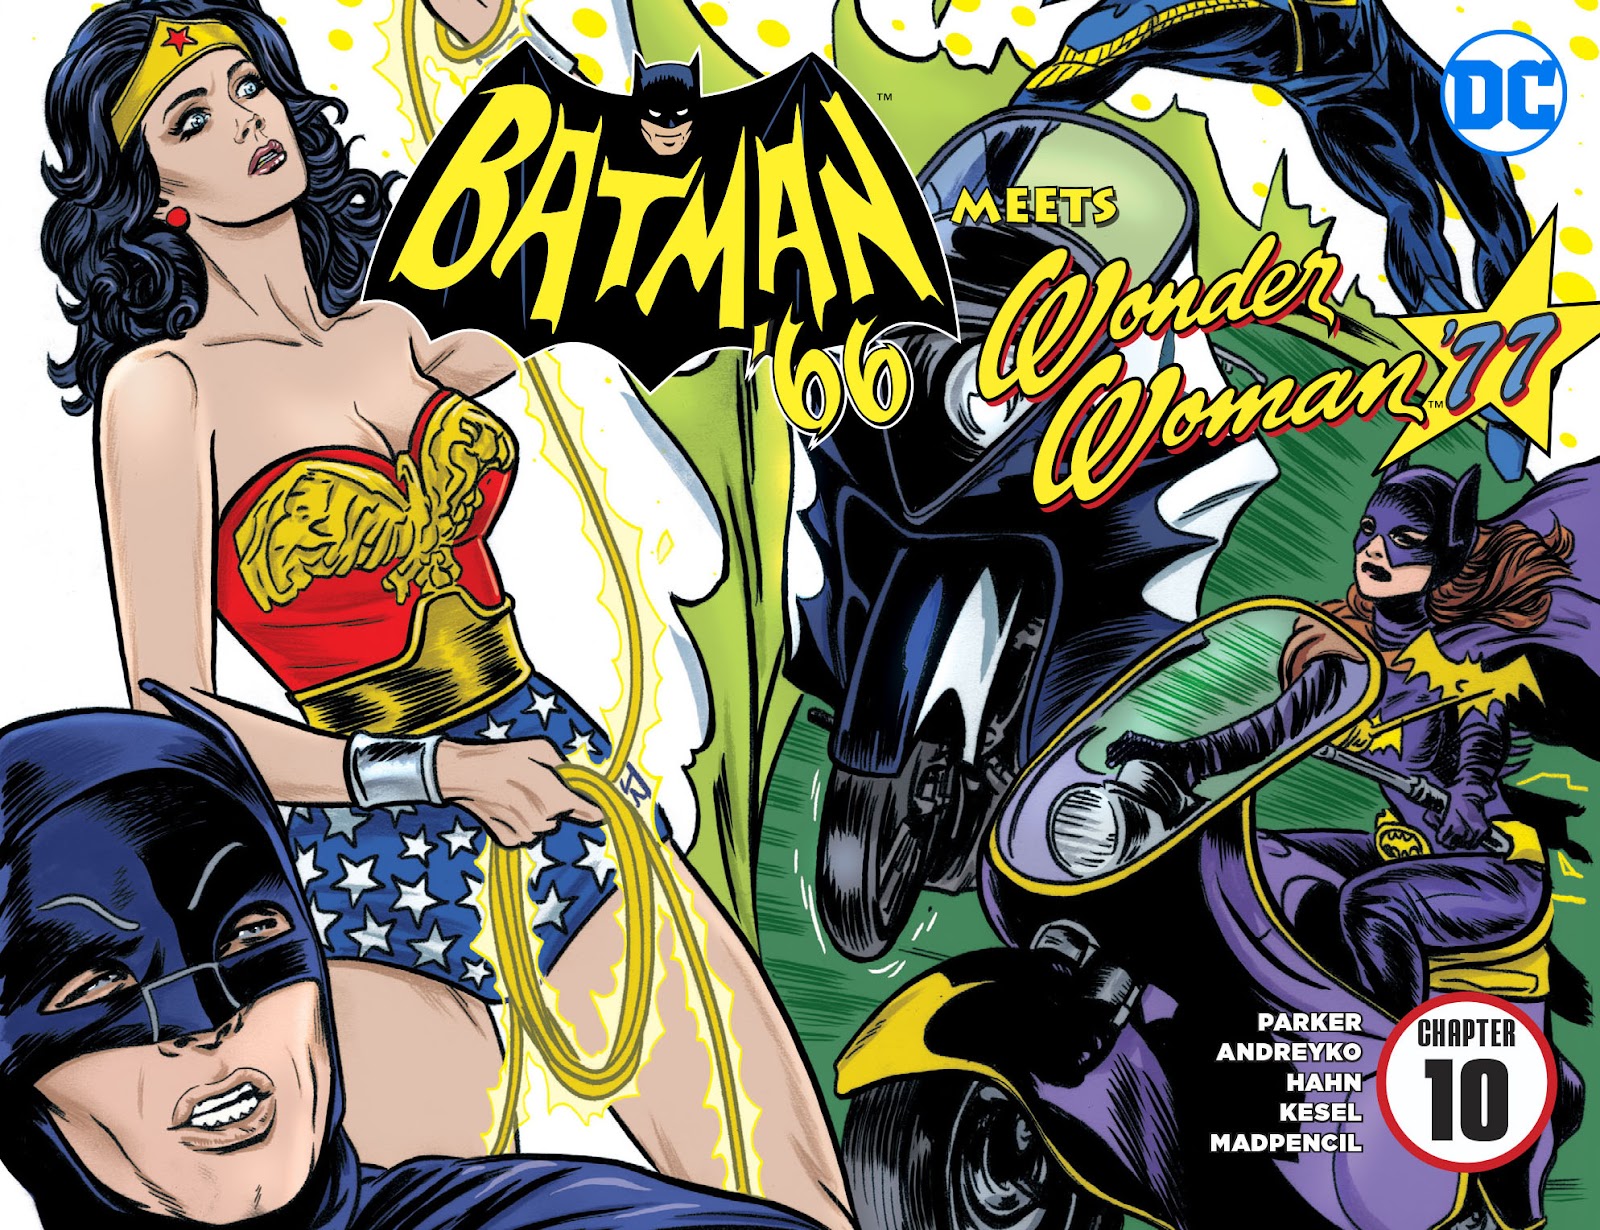 Batman '66 Meets Wonder Woman '77 issue 10 - Page 1